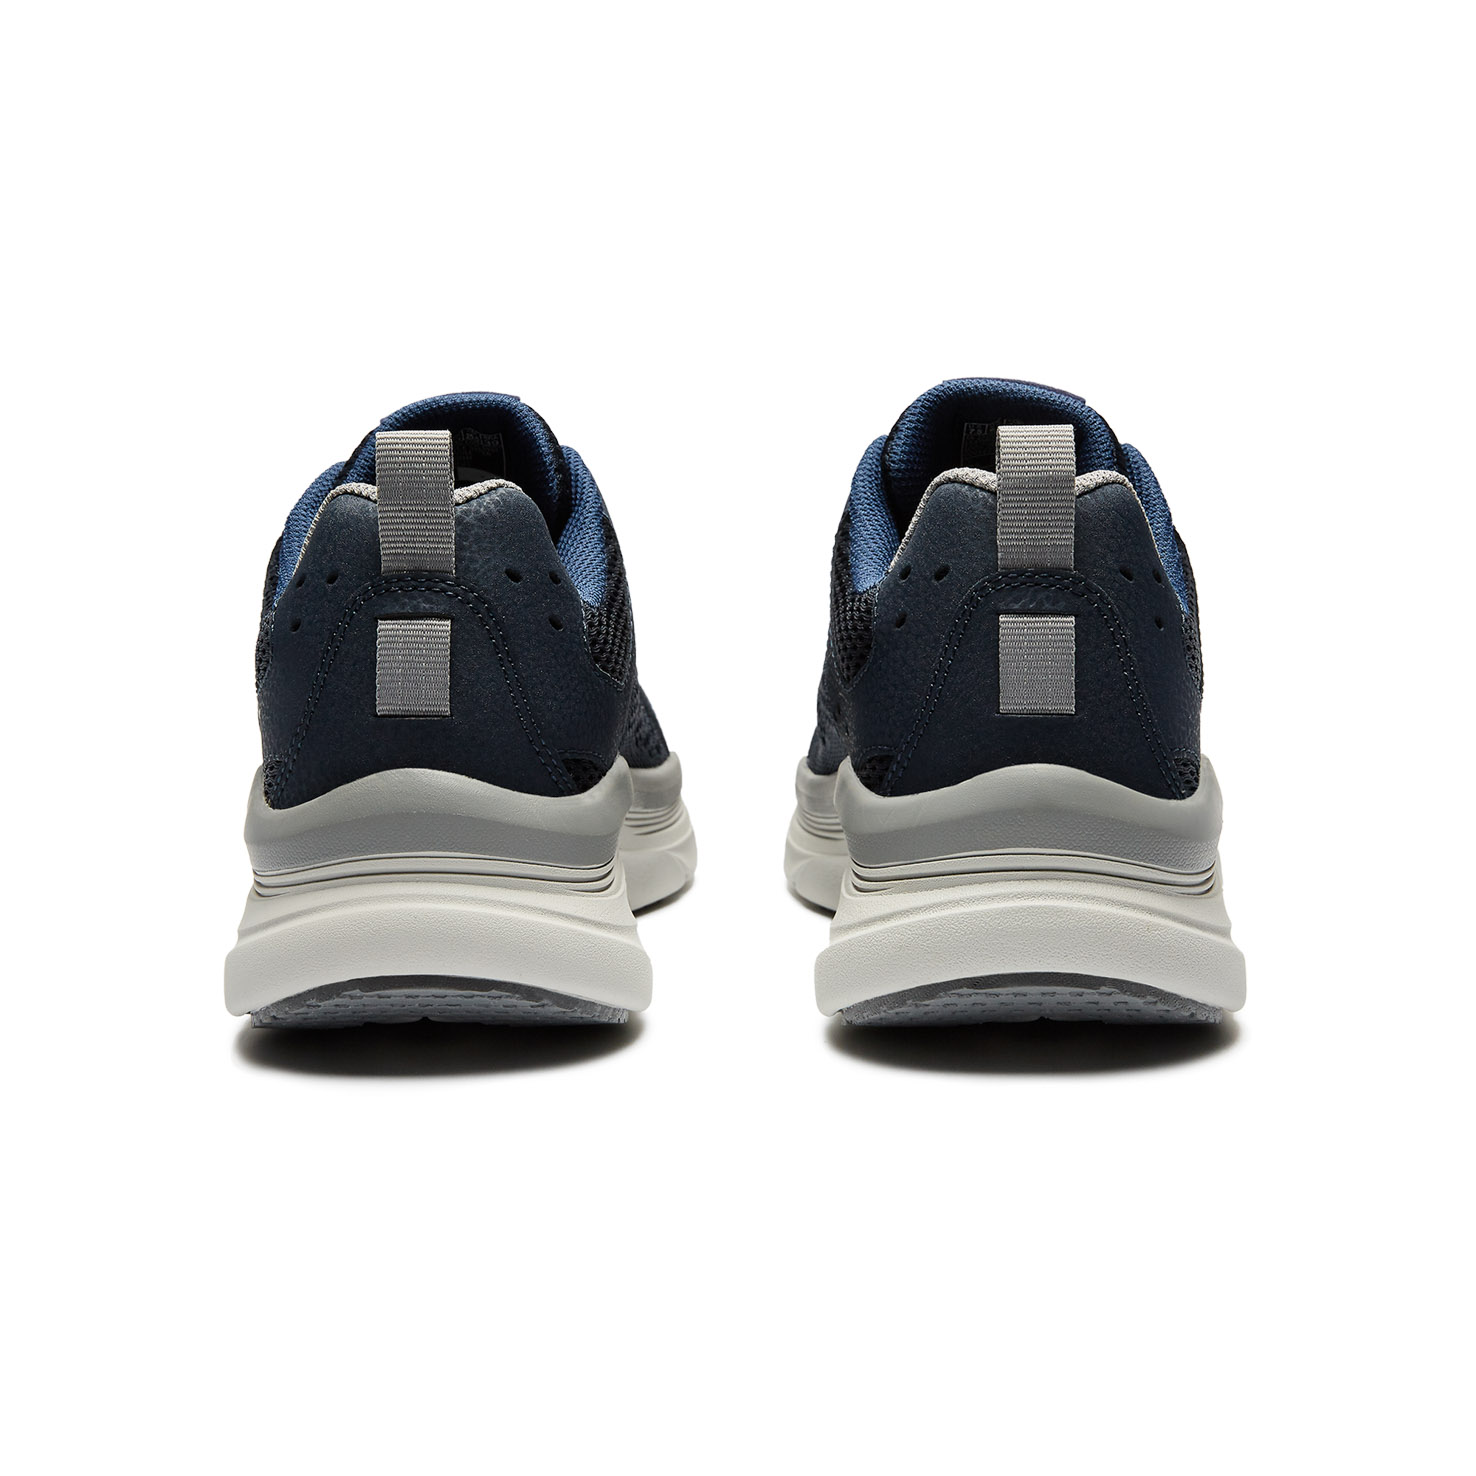 Men's low shoes SKECHERS, размер 41, цвет черный SK232044 - фото 4